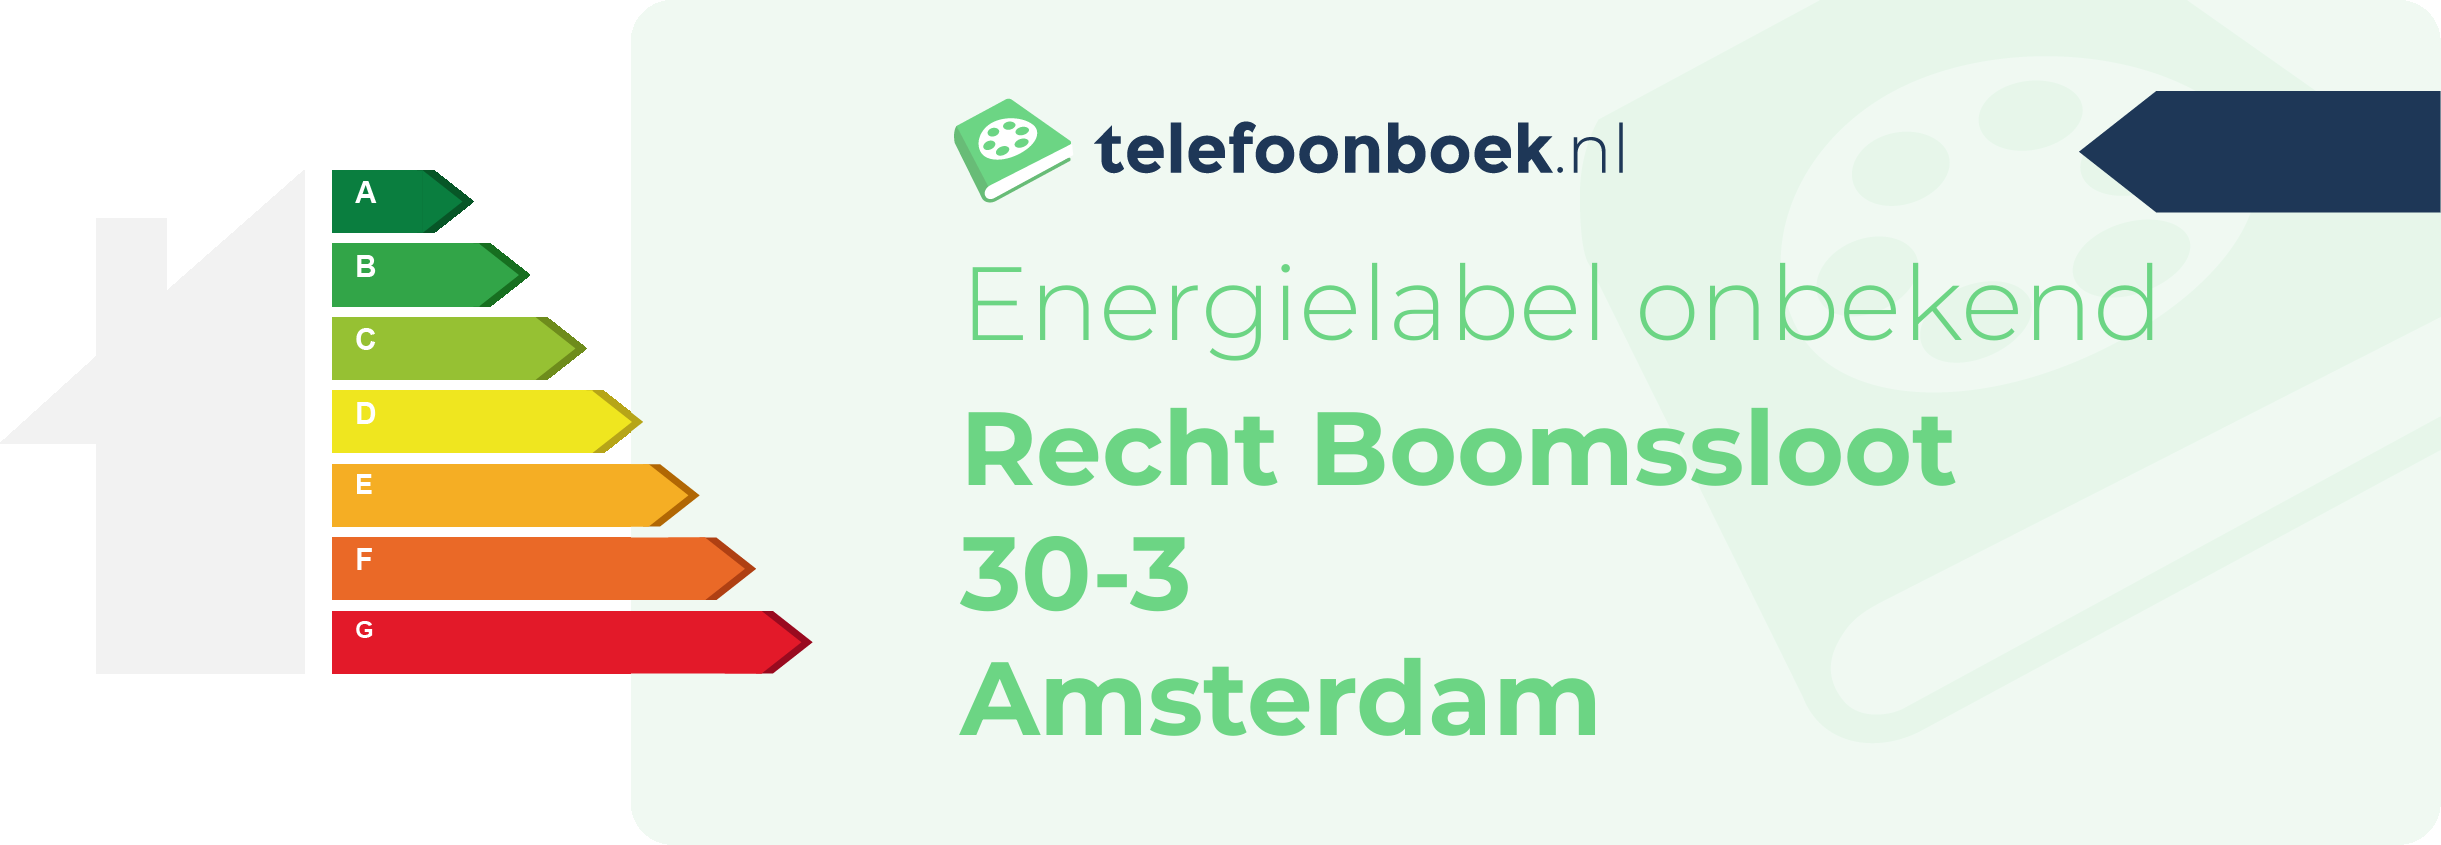 Energielabel Recht Boomssloot 30-3 Amsterdam